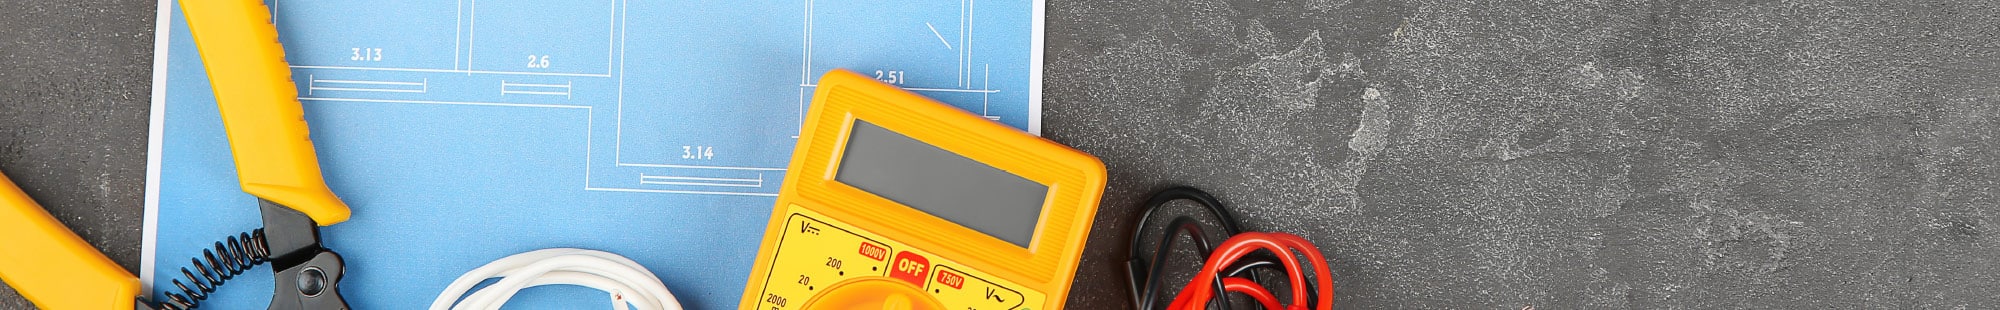 yellow energy saving calculator